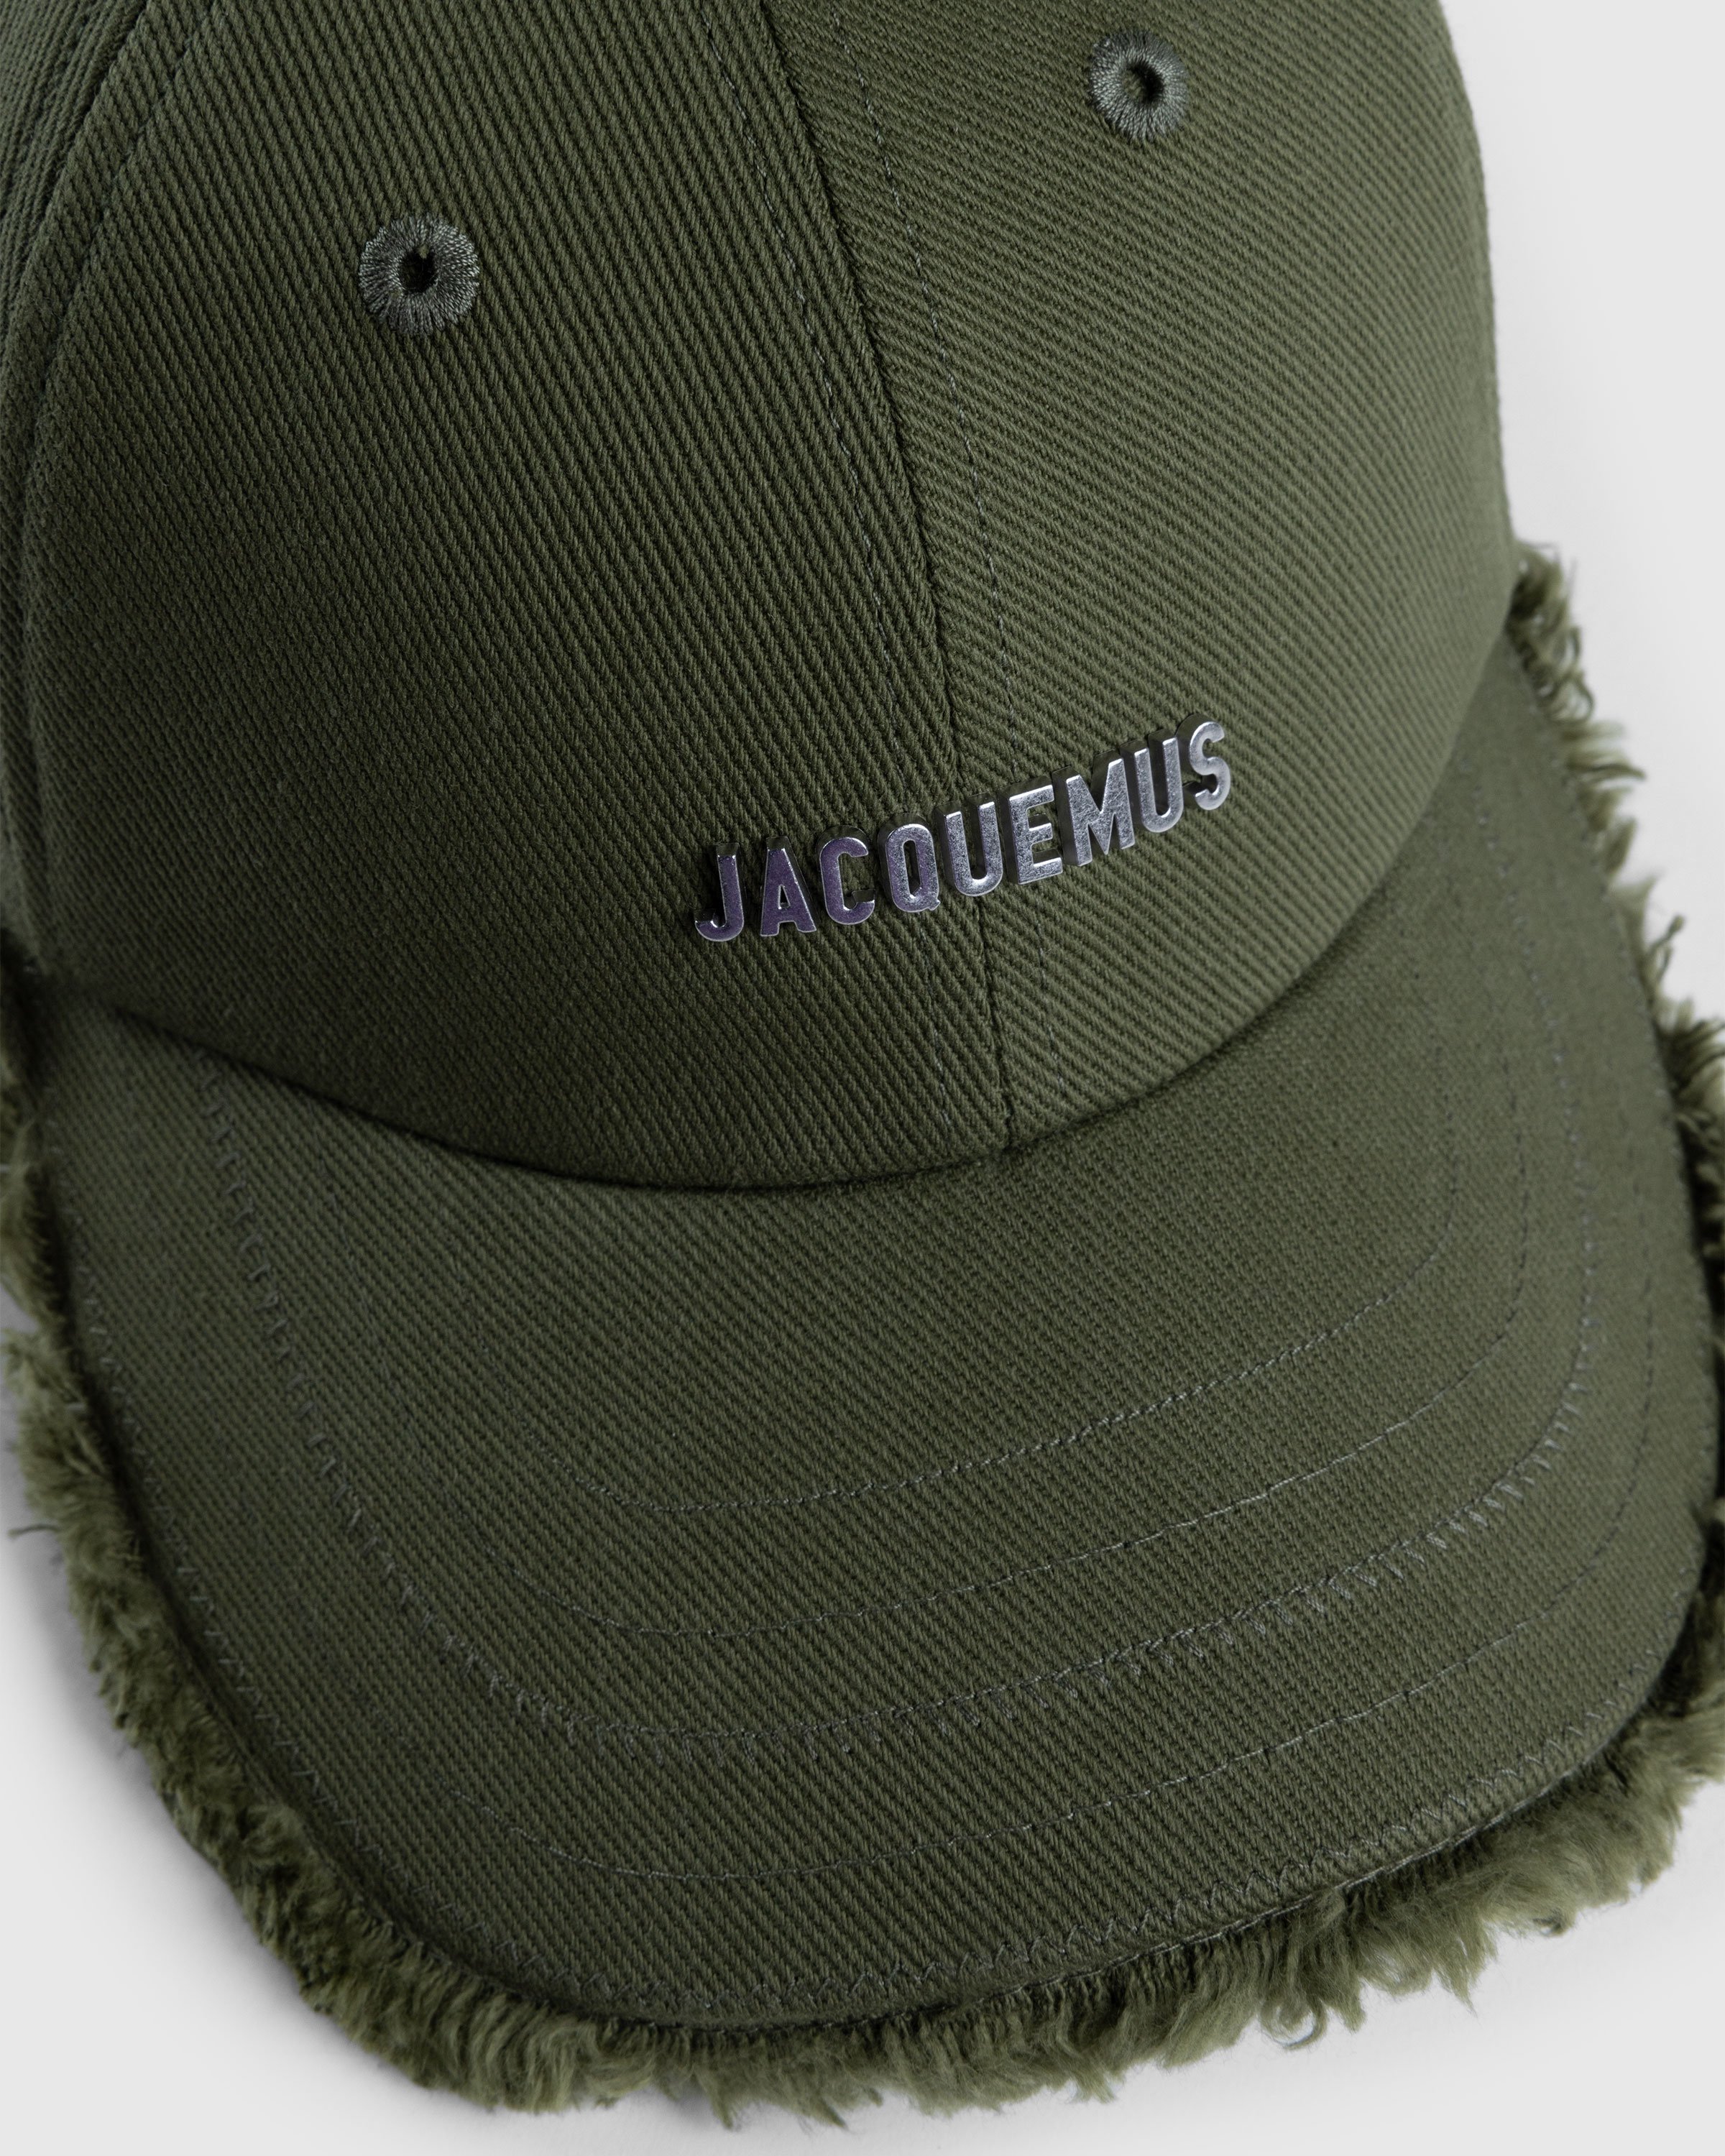 JACQUEMUS - LA CASQUETTE ARTICHAUT - Accessories - Green - Image 6